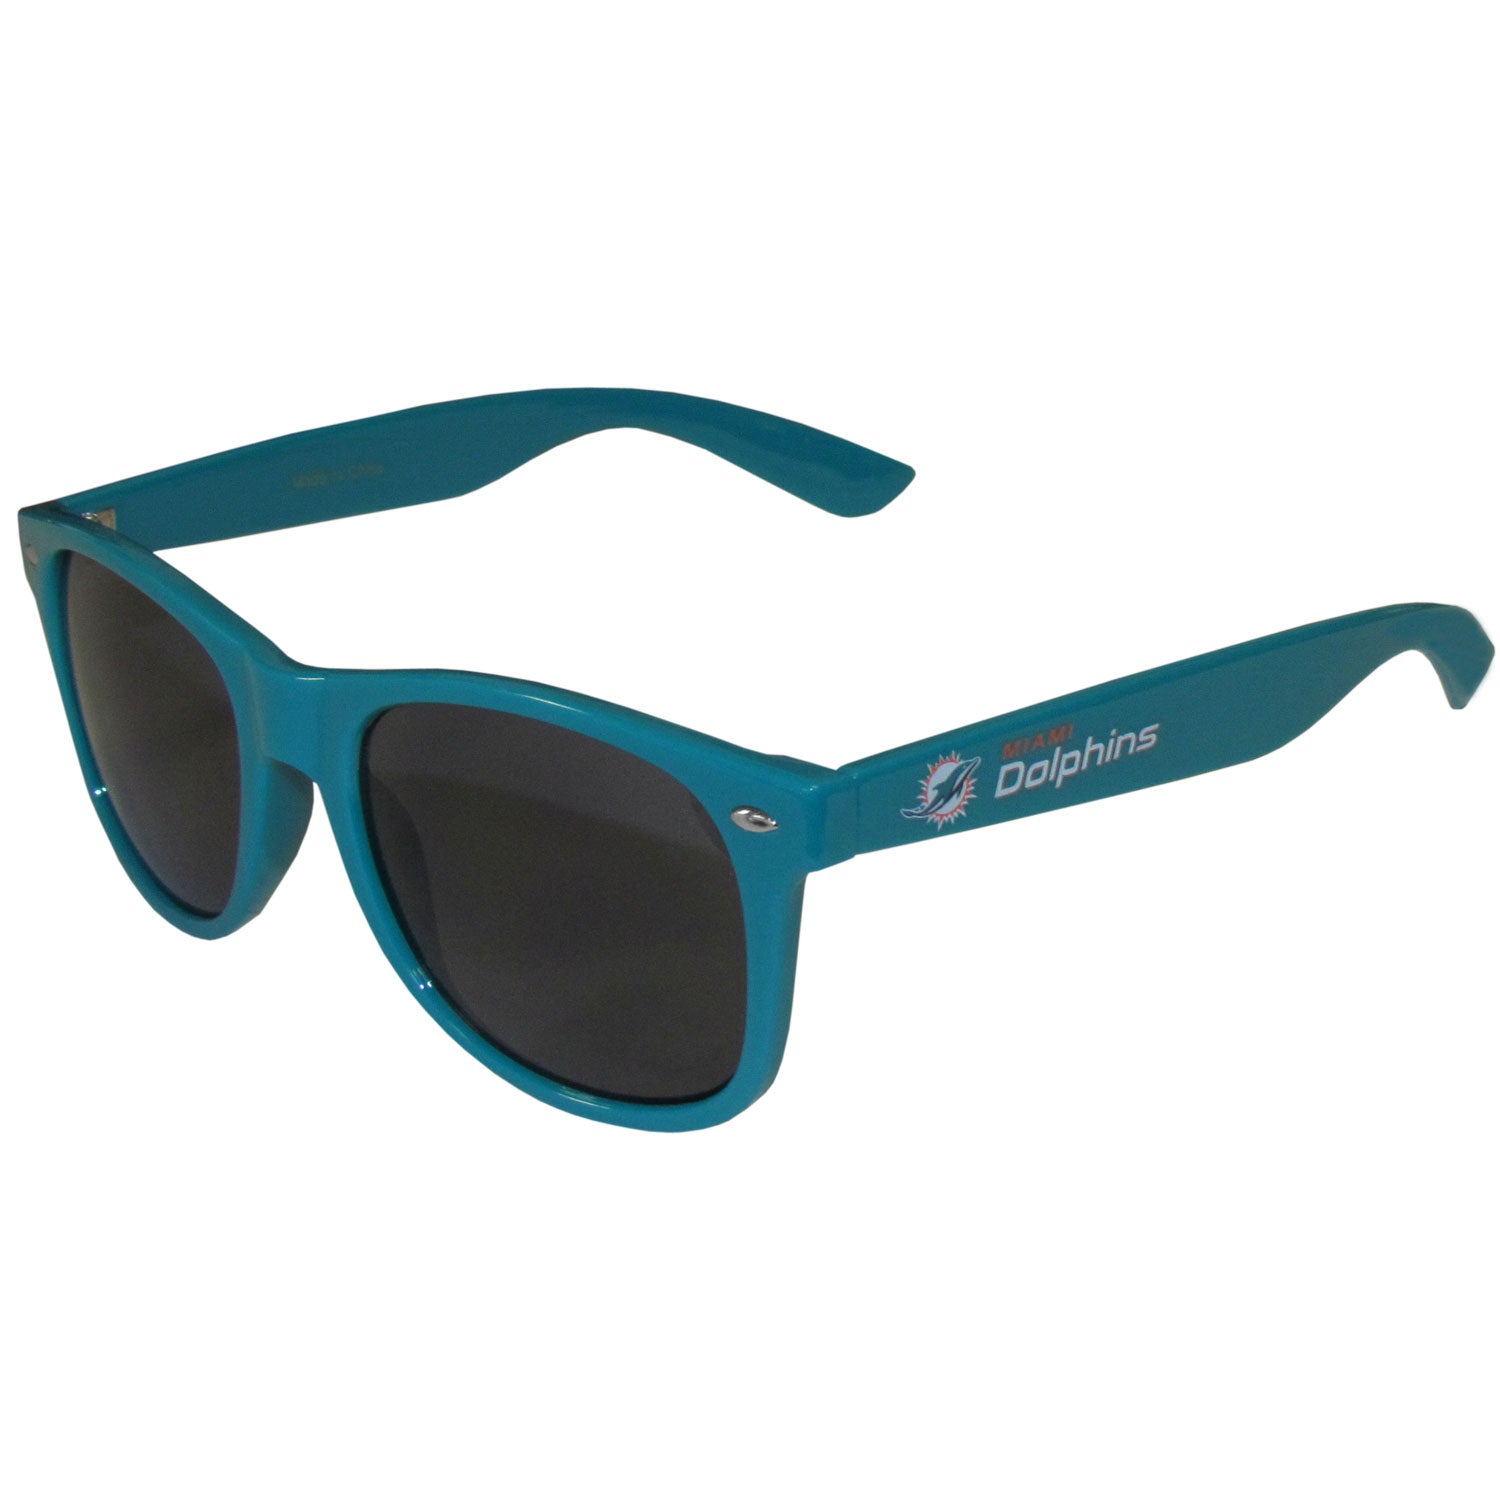 Miami Dolphins Beachfarer Wayfair Sunglasses - Aqua